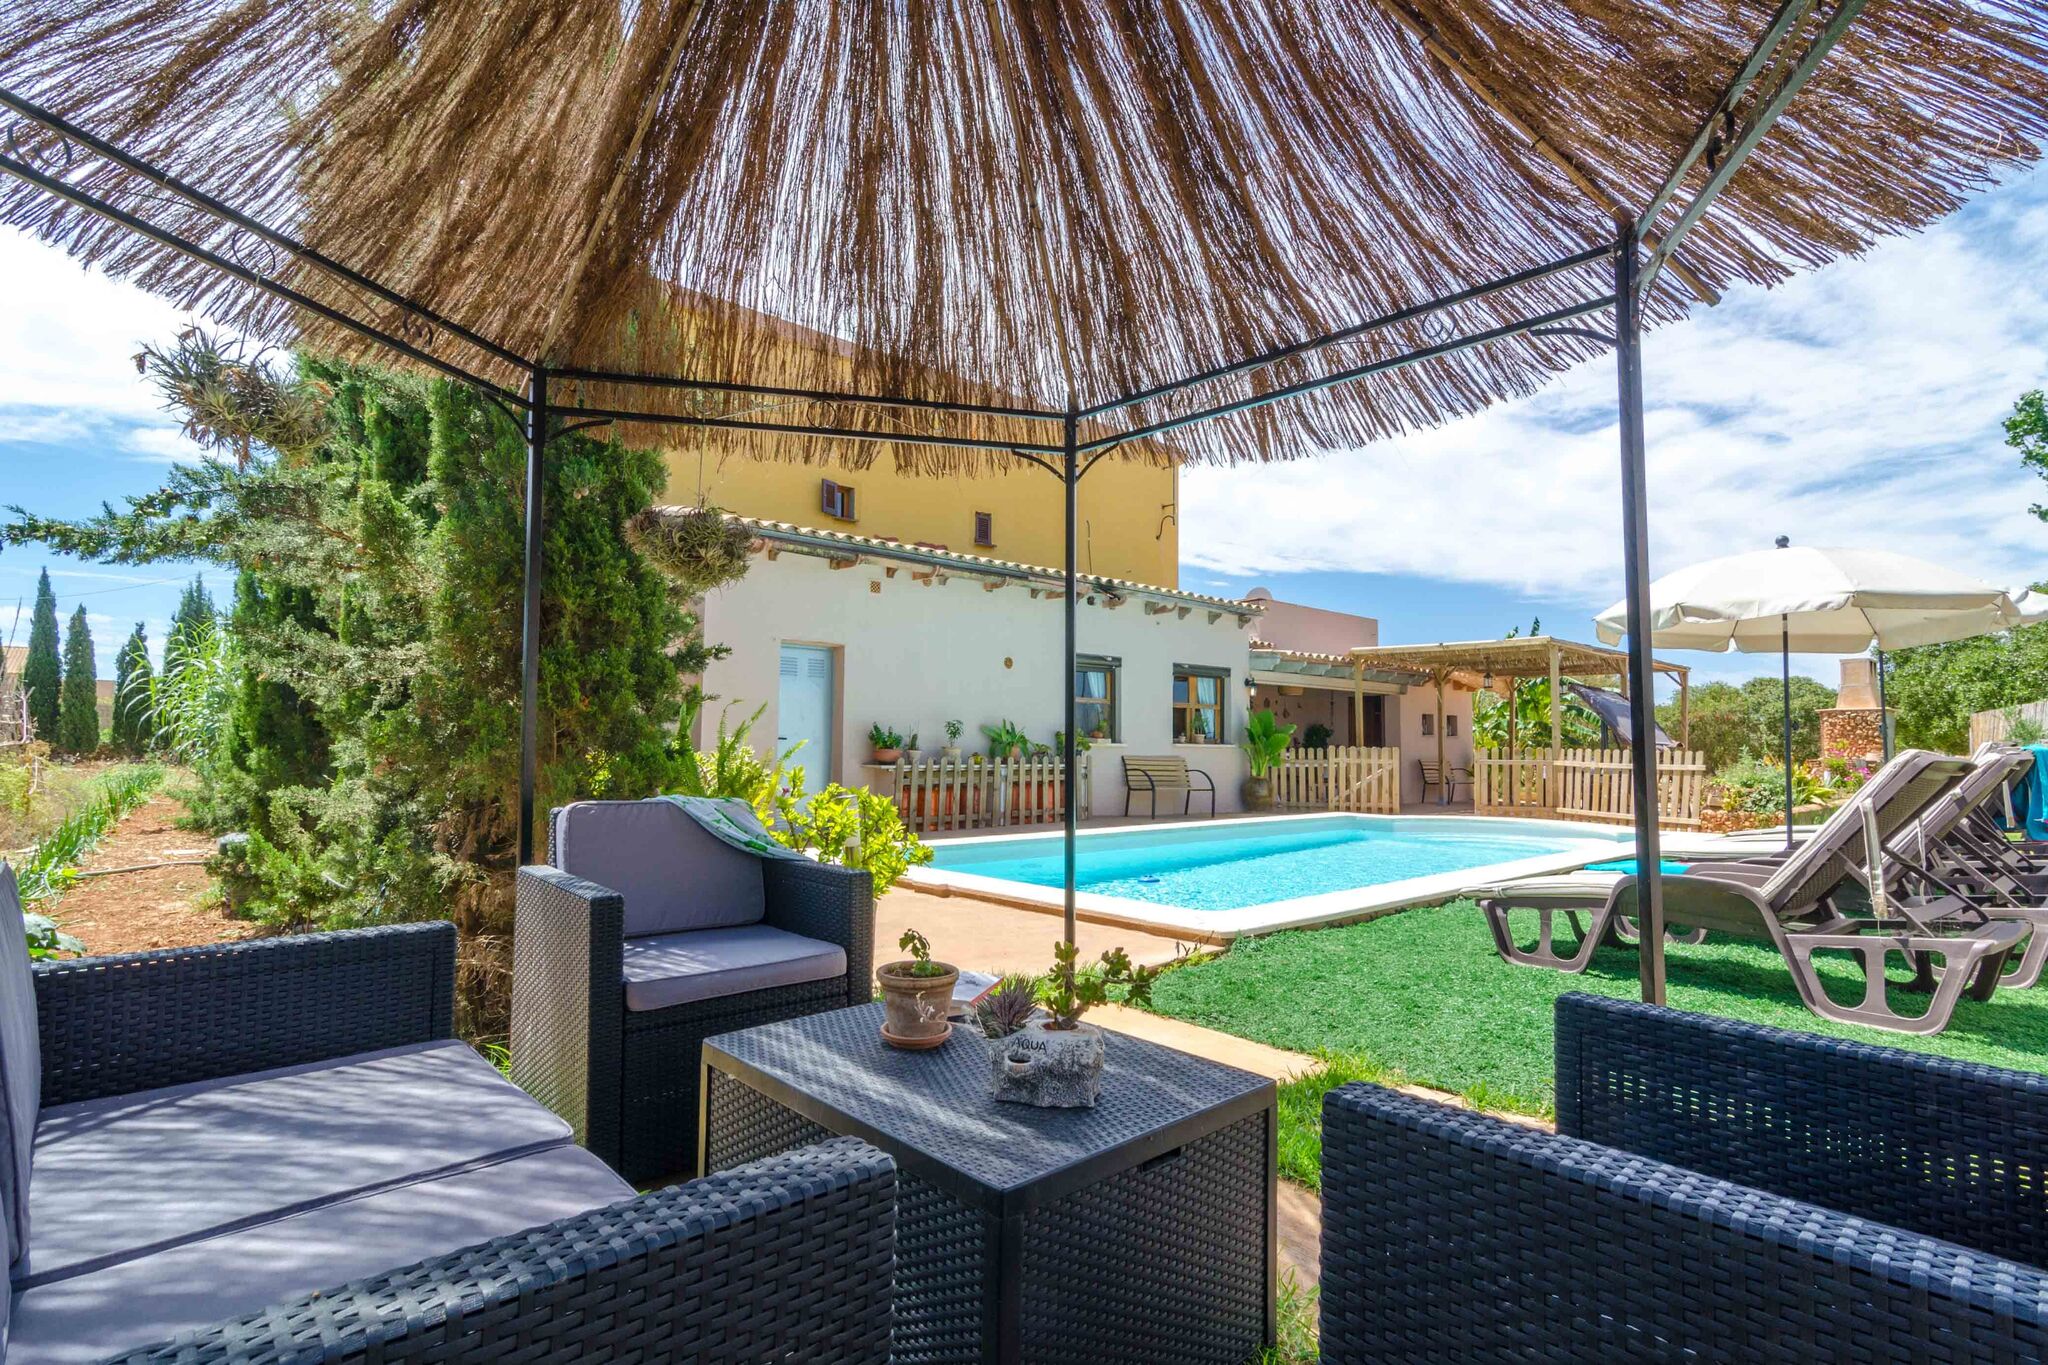 Schitterende villa met zwembad in Manacor Spanje